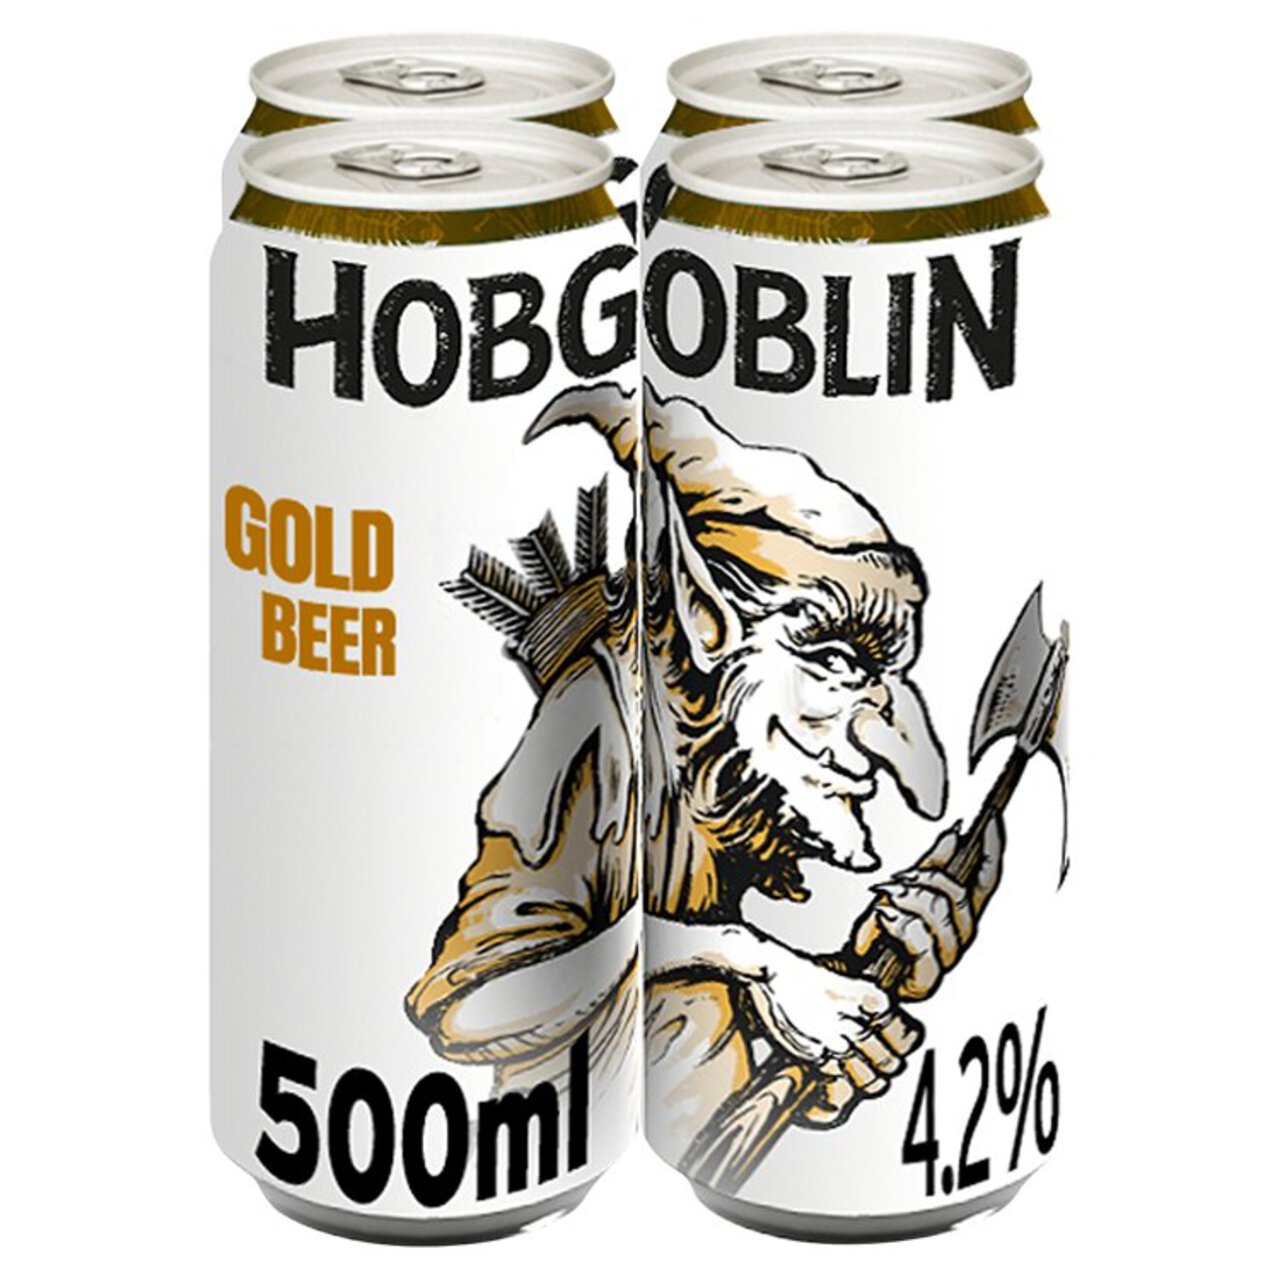 Hobgoblin Gold Ale Beer Cans 4 x 500ml